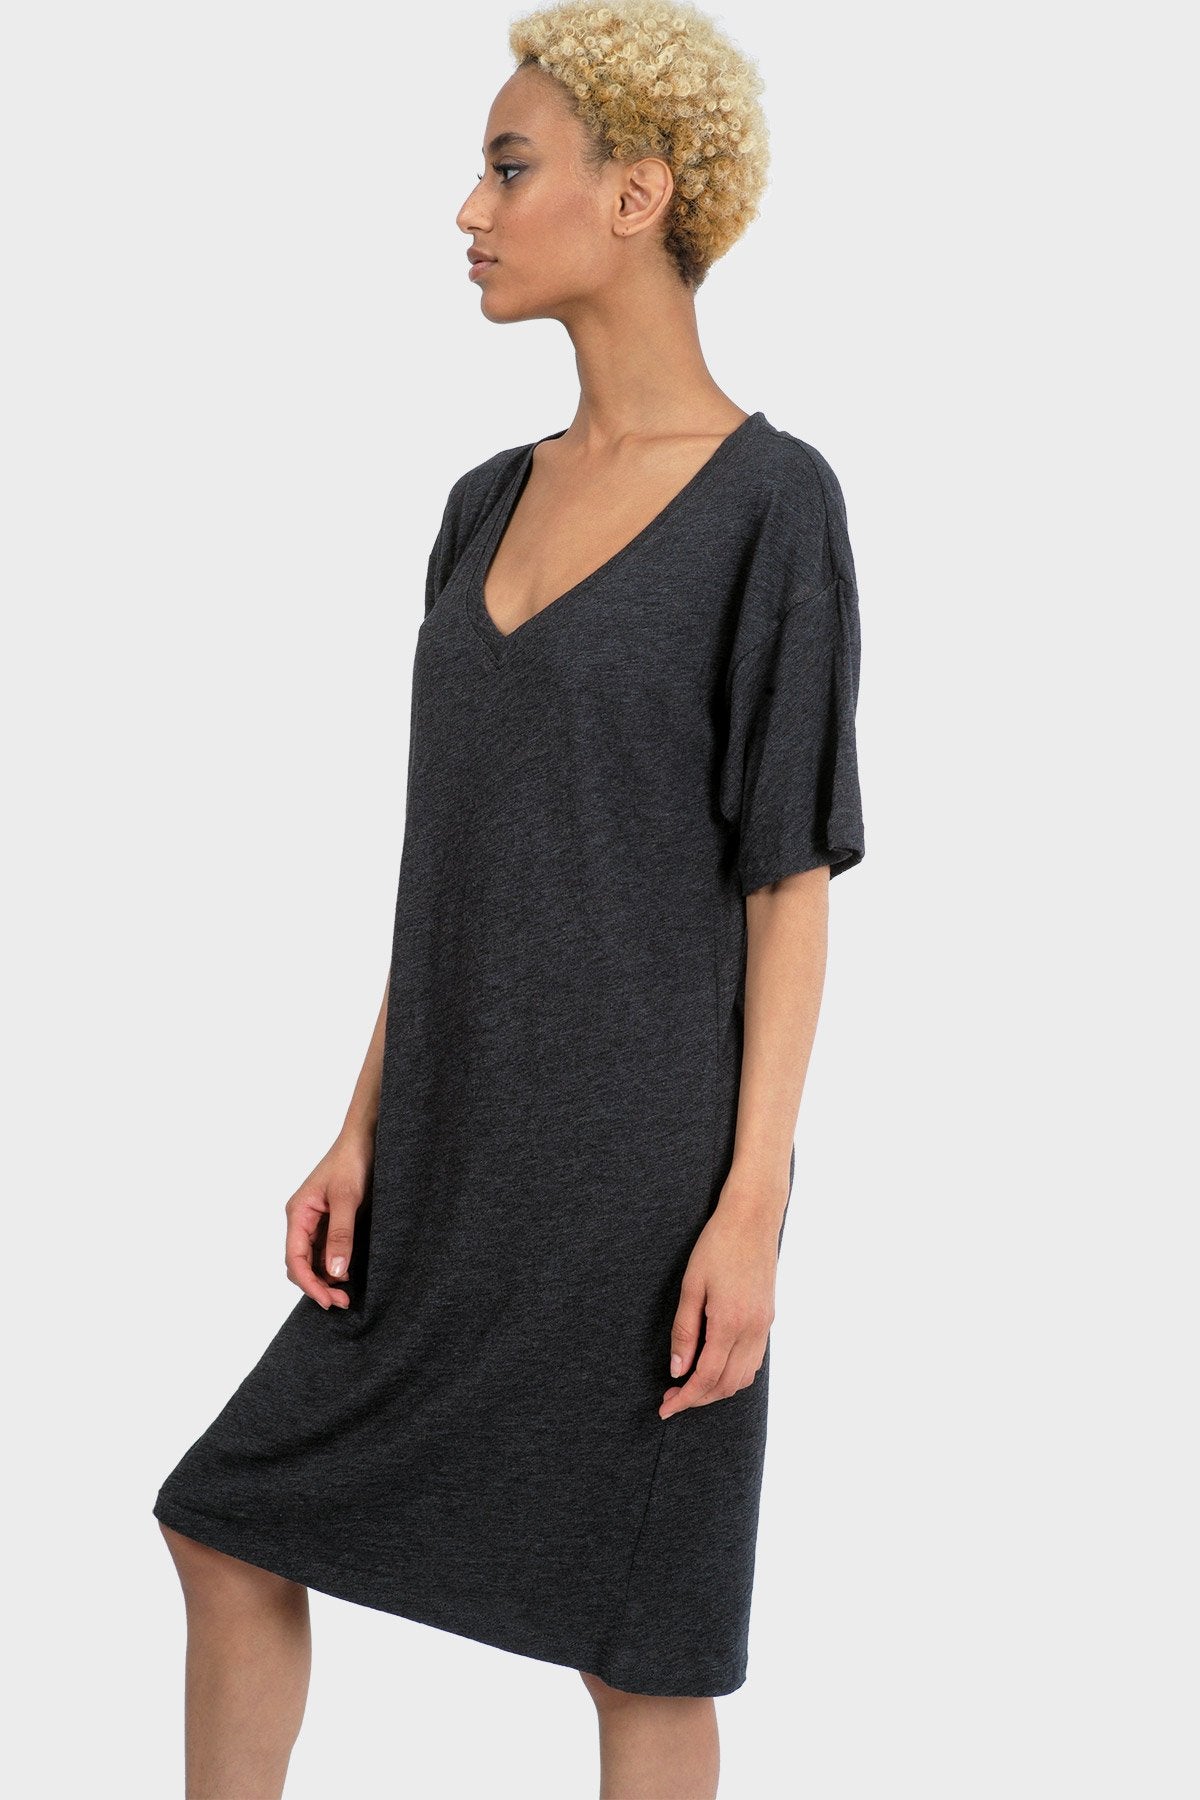 MIKA T-SHIRT DRESS - 337 BRAND Women's Sustainable Clothing